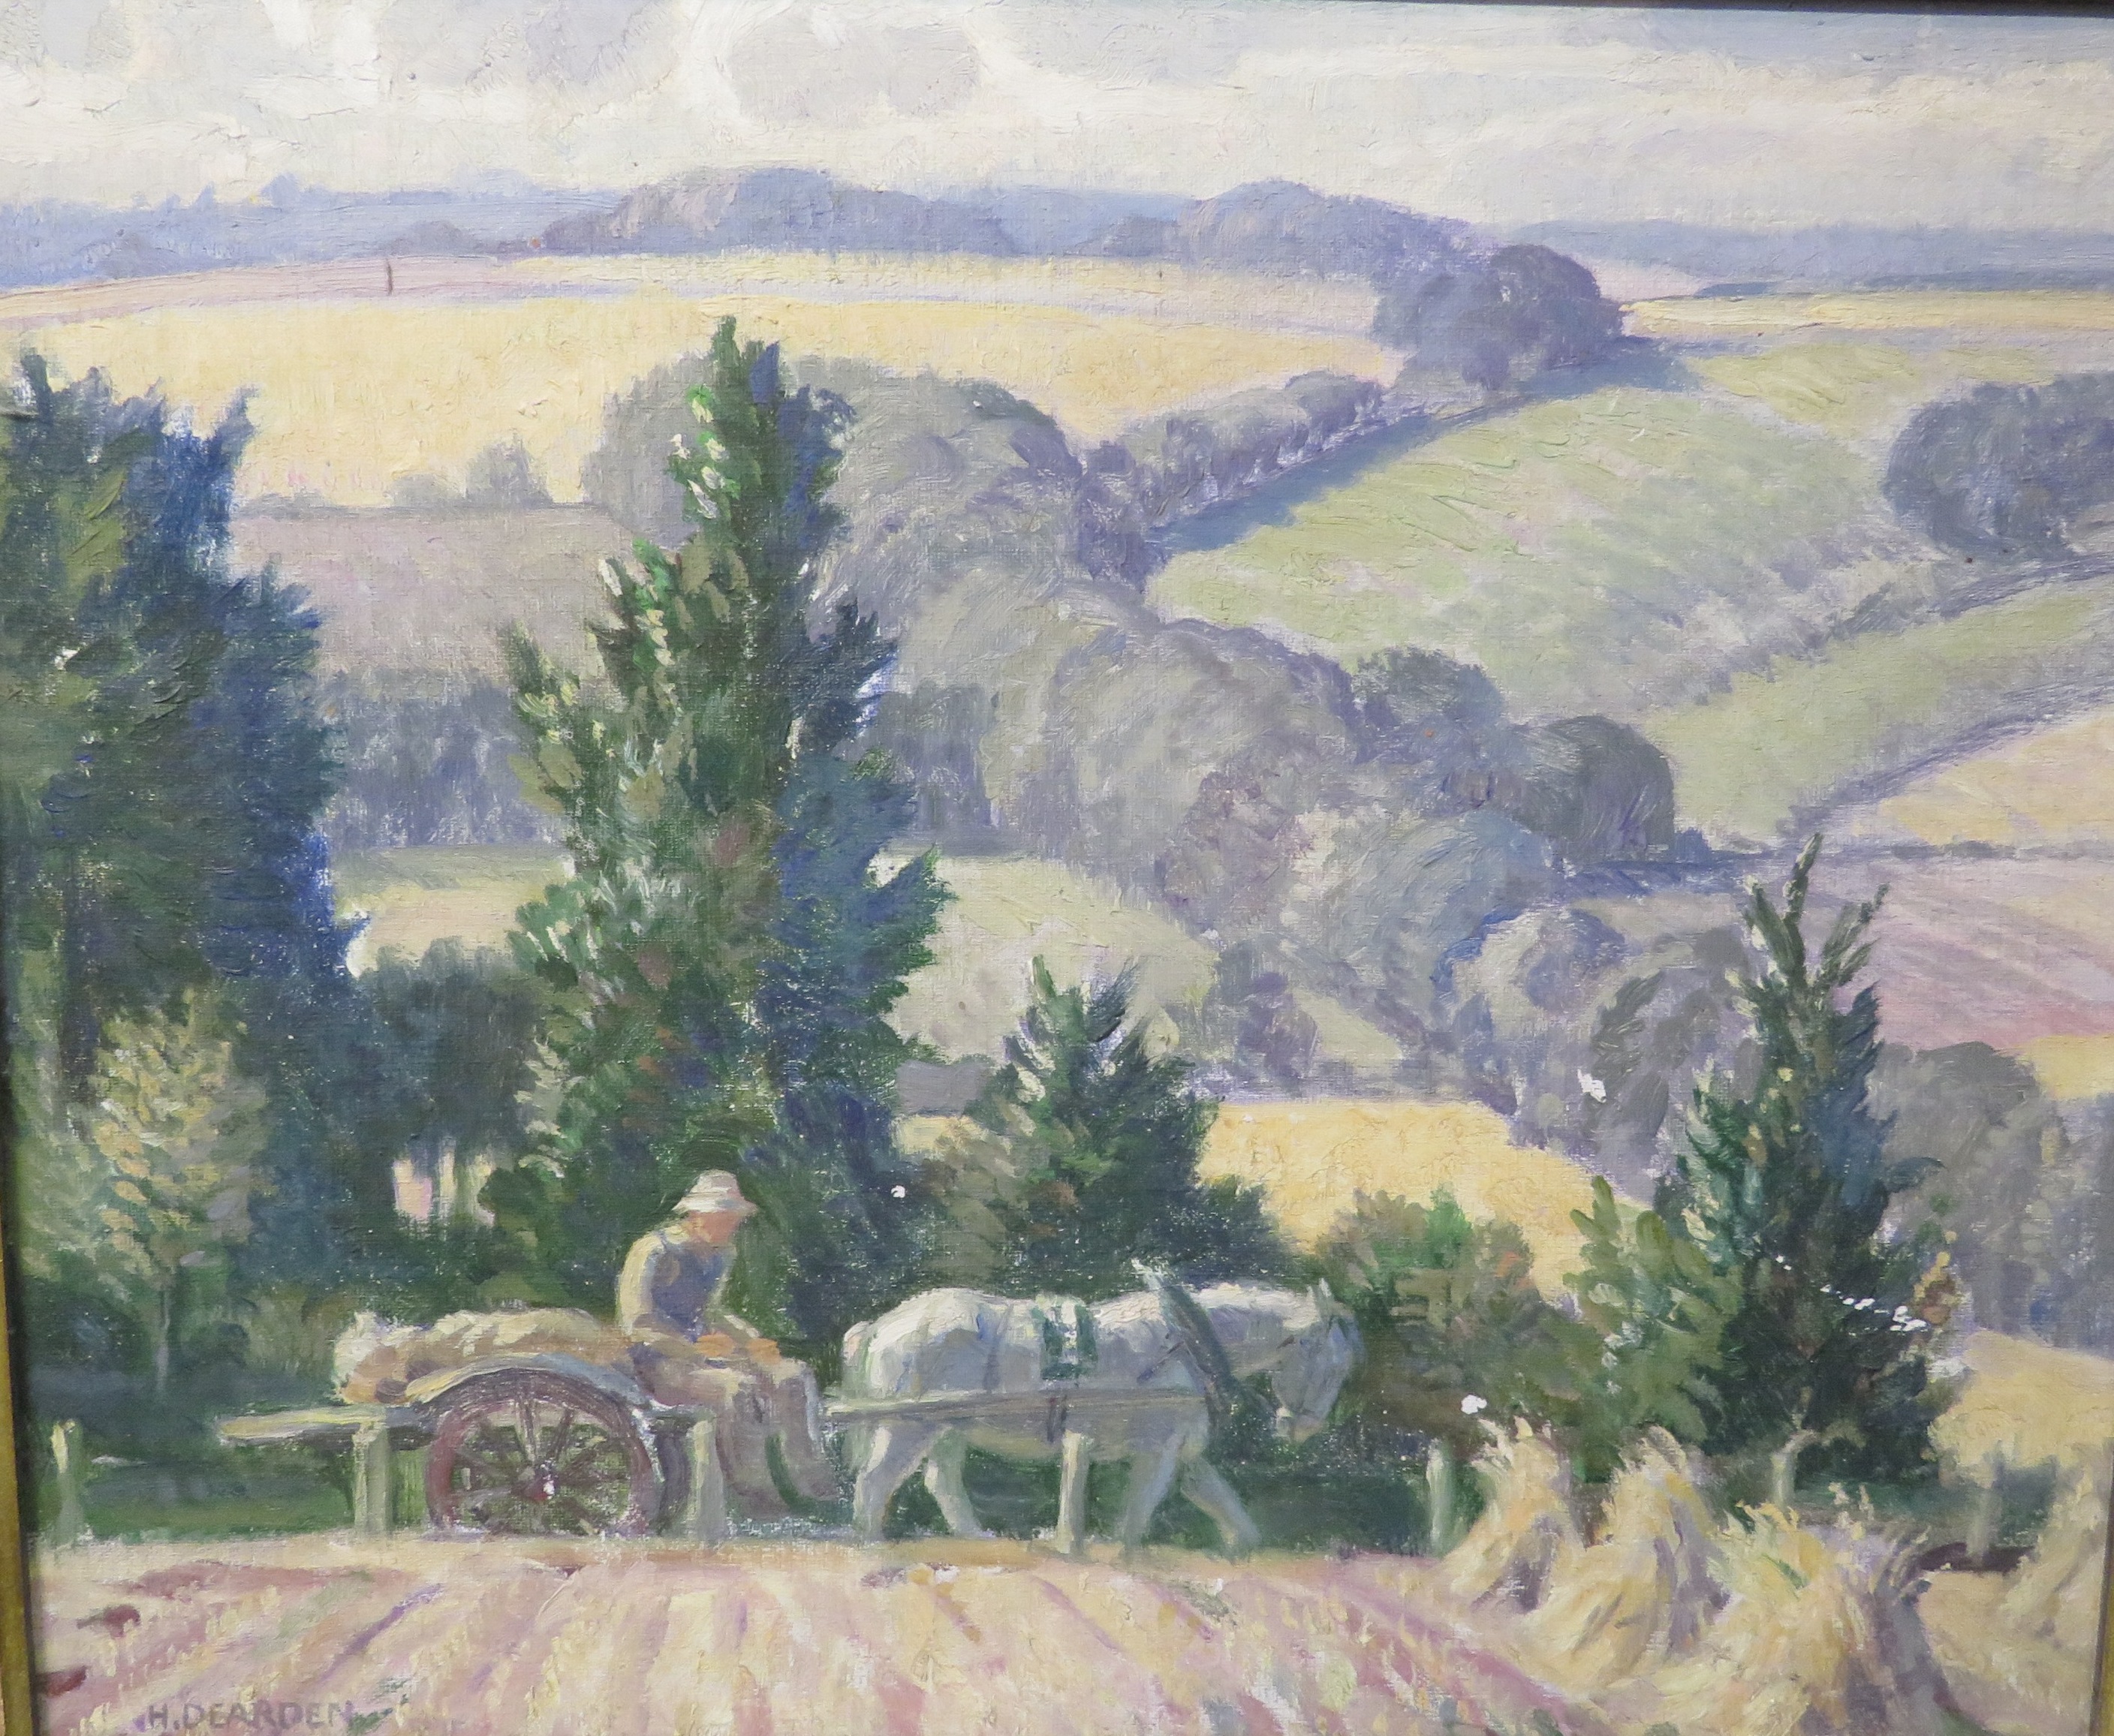 Harold Dearden (1888-1962) - horse and cart on hillside, oil on board, signed lower left, (30.5cm